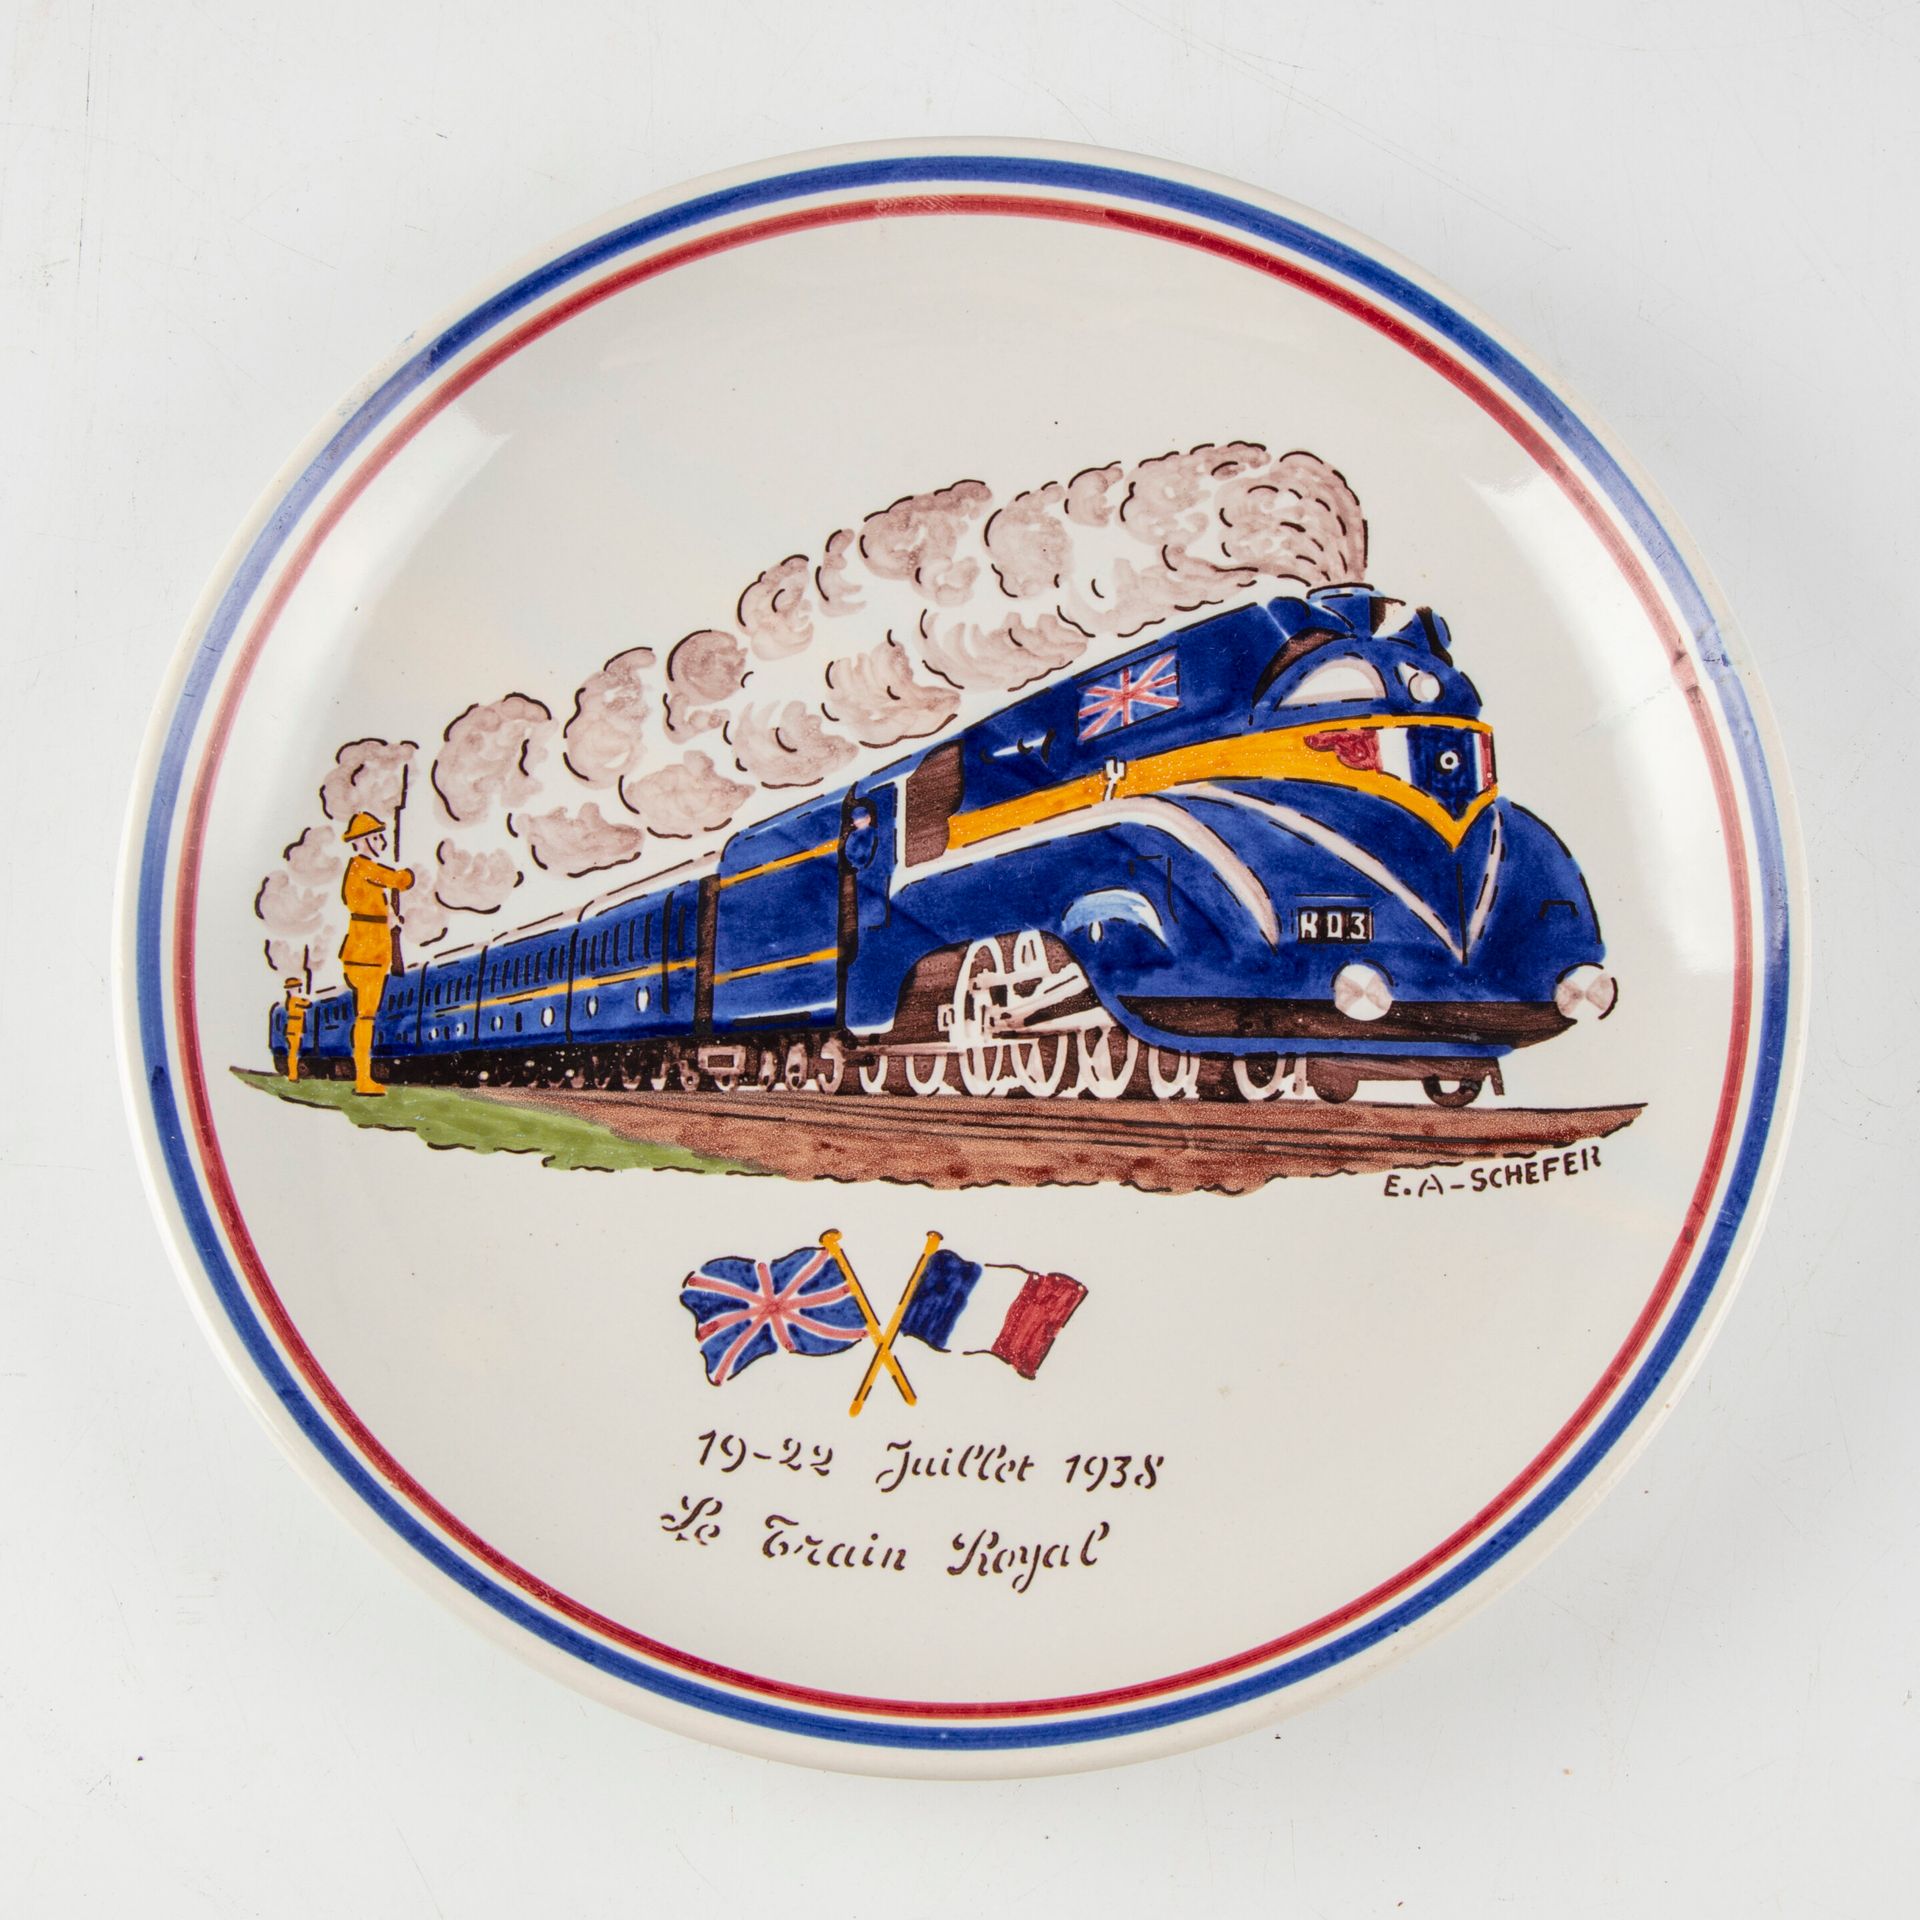 Null 在E.A SCHEFER之后--圣克莱芒制造厂

饰有 "1938年7月19日至22日皇家列车 "纪念品的釉陶盘

背面有签名，编号为70/100

&hellip;